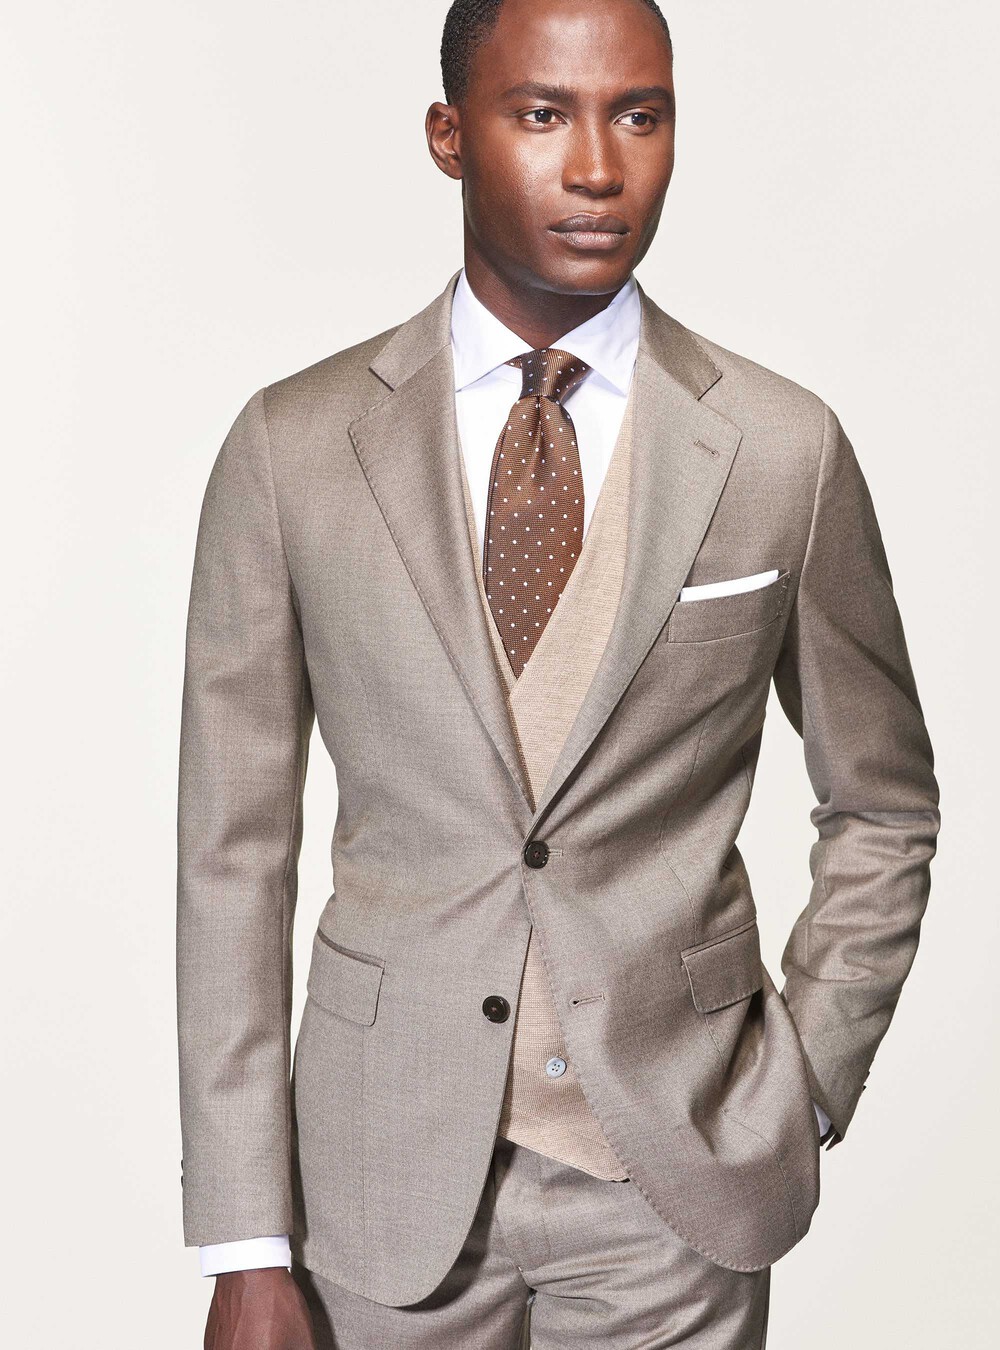 Suit blazer in pure superfine wool 110's Vitale Barberis Canonico |  GutteridgeUS | Suits Uomo